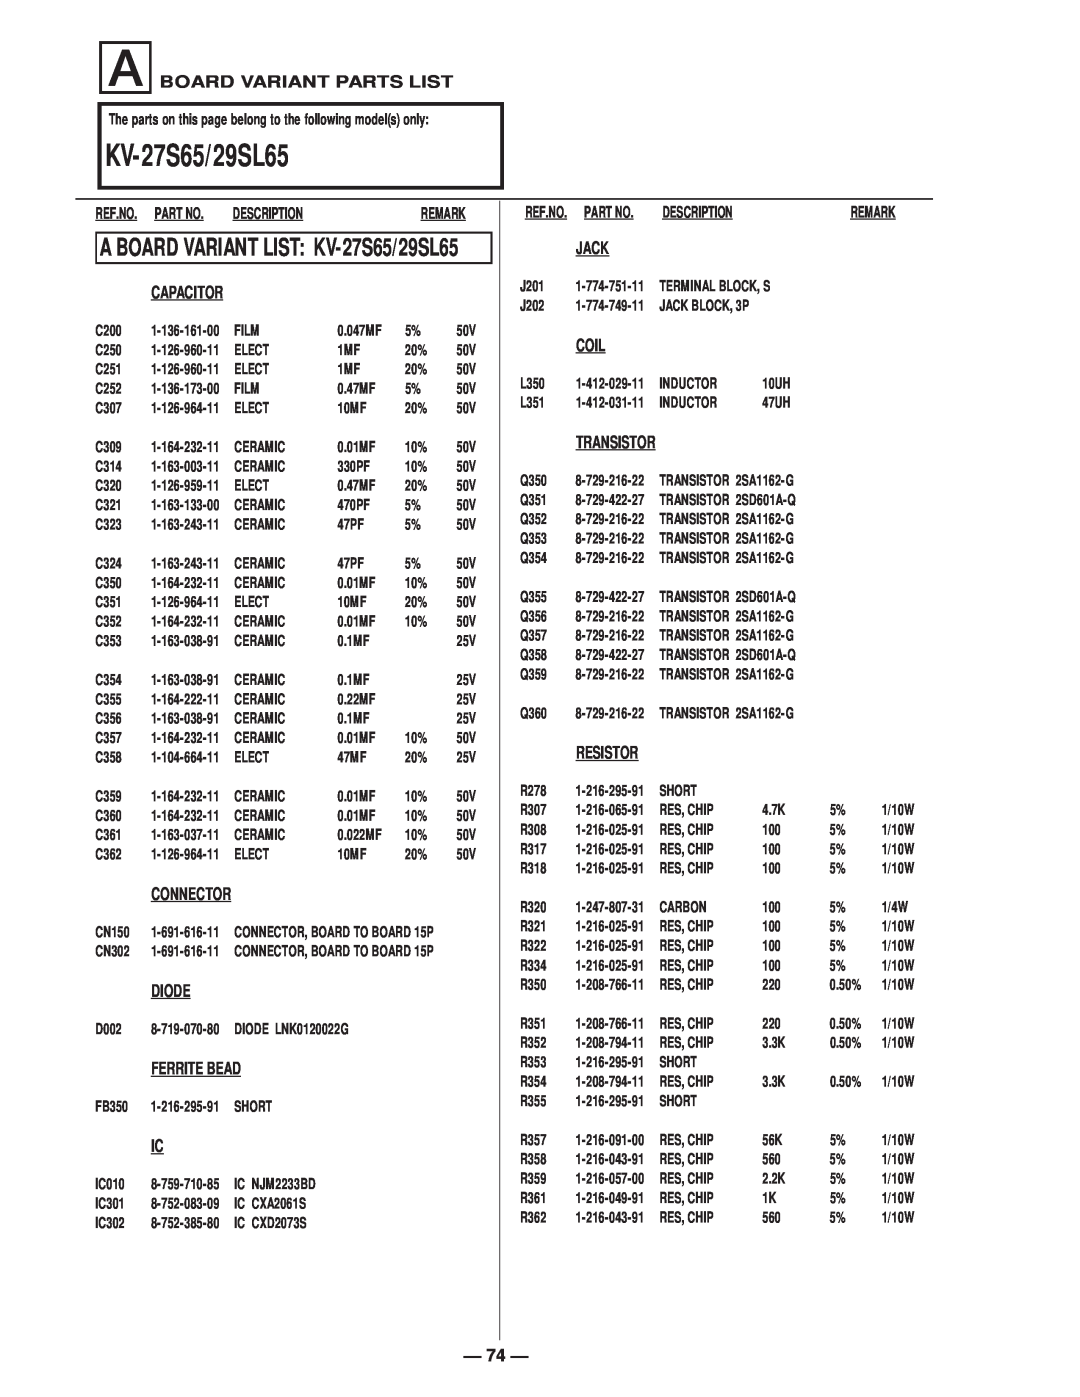 Sony KV-29SL65C, KV-29SL40 A BOARD VARIANT LIST KV-27S65/29SL65, A Board Variant Parts List, Description, Remark 